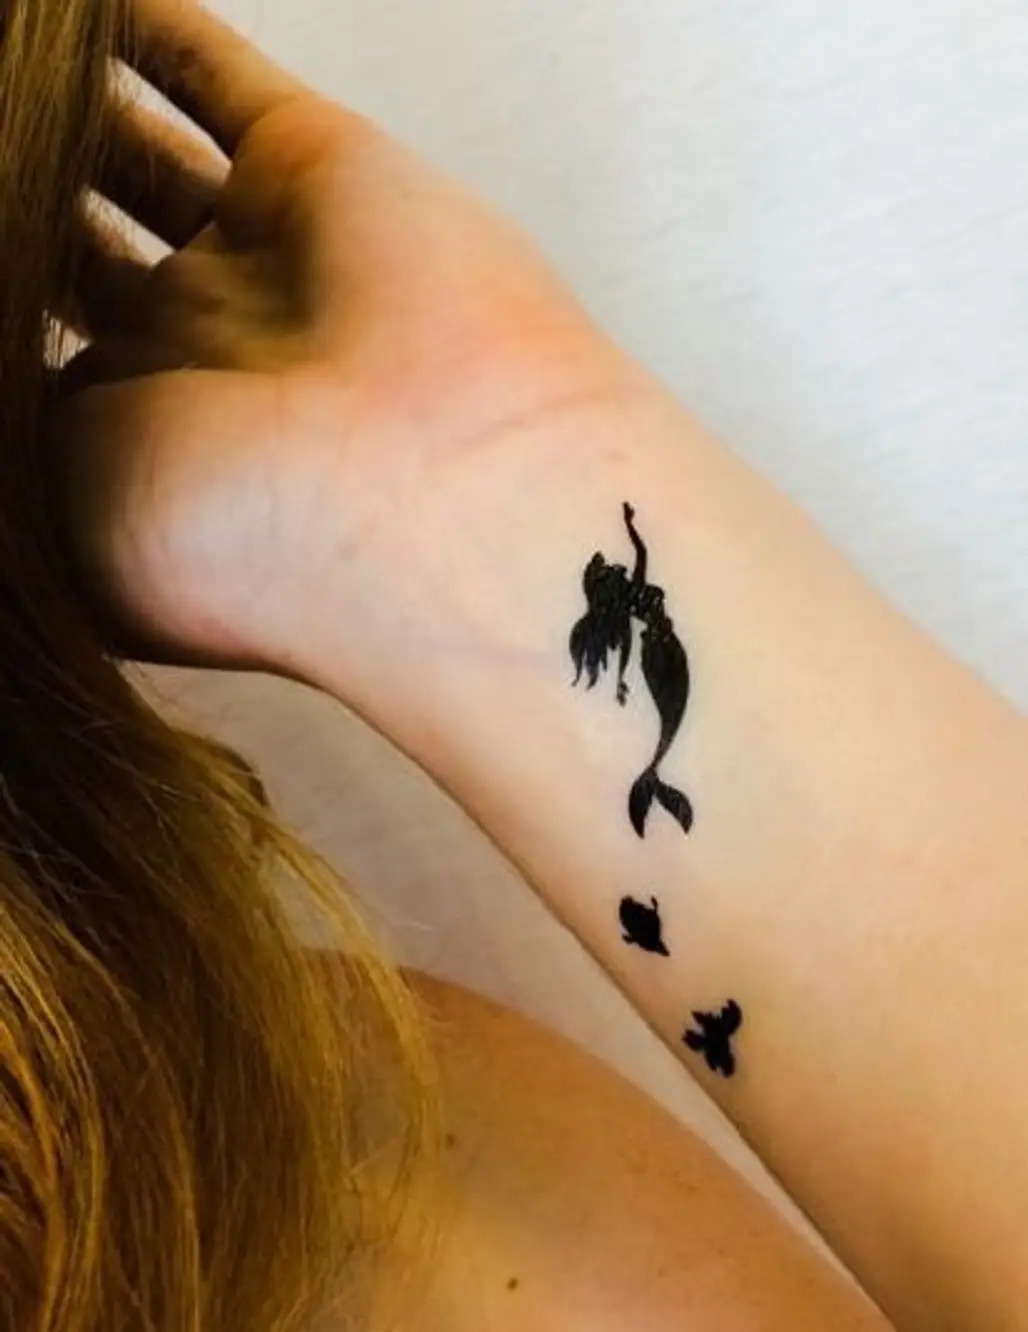 tattoo,arm,skin,leg,finger,